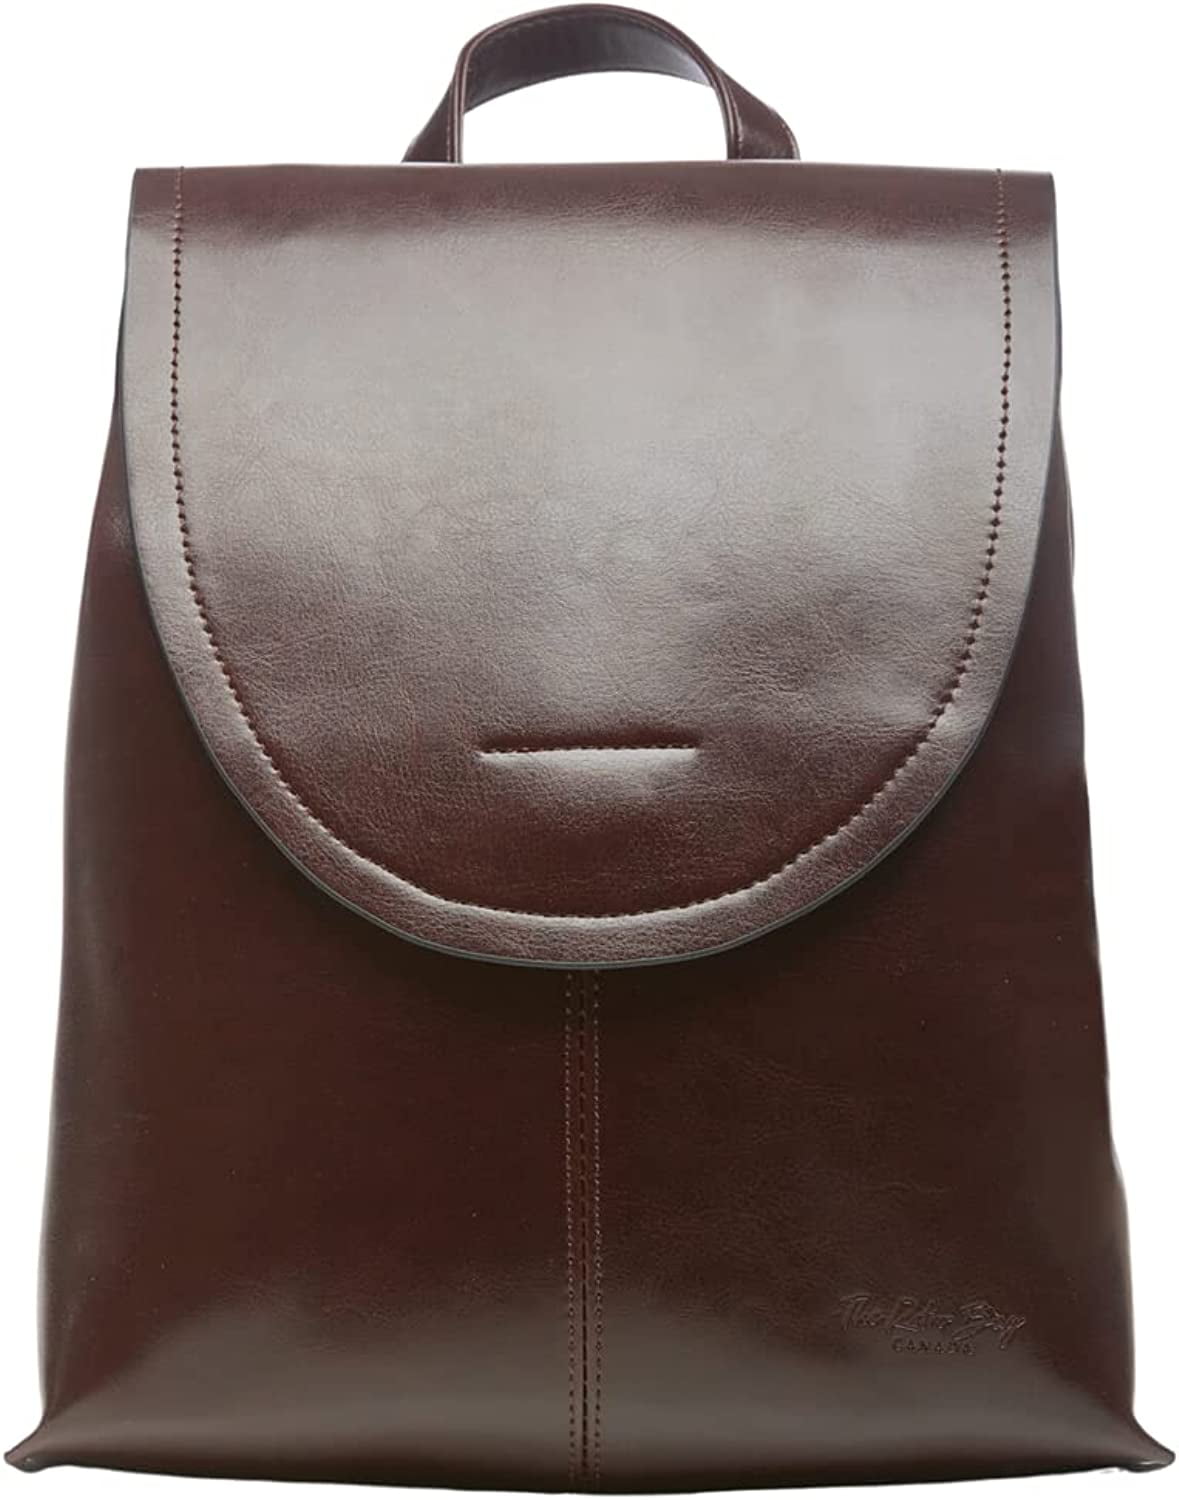 Buy Cognac Brown CONVERTIBLE Backpack, Leather BACKPACK PURSE, Shoulder  Bag, Crossbody Leather Handbag, School Bag, Cognac Leather Bag Online in  India - Etsy